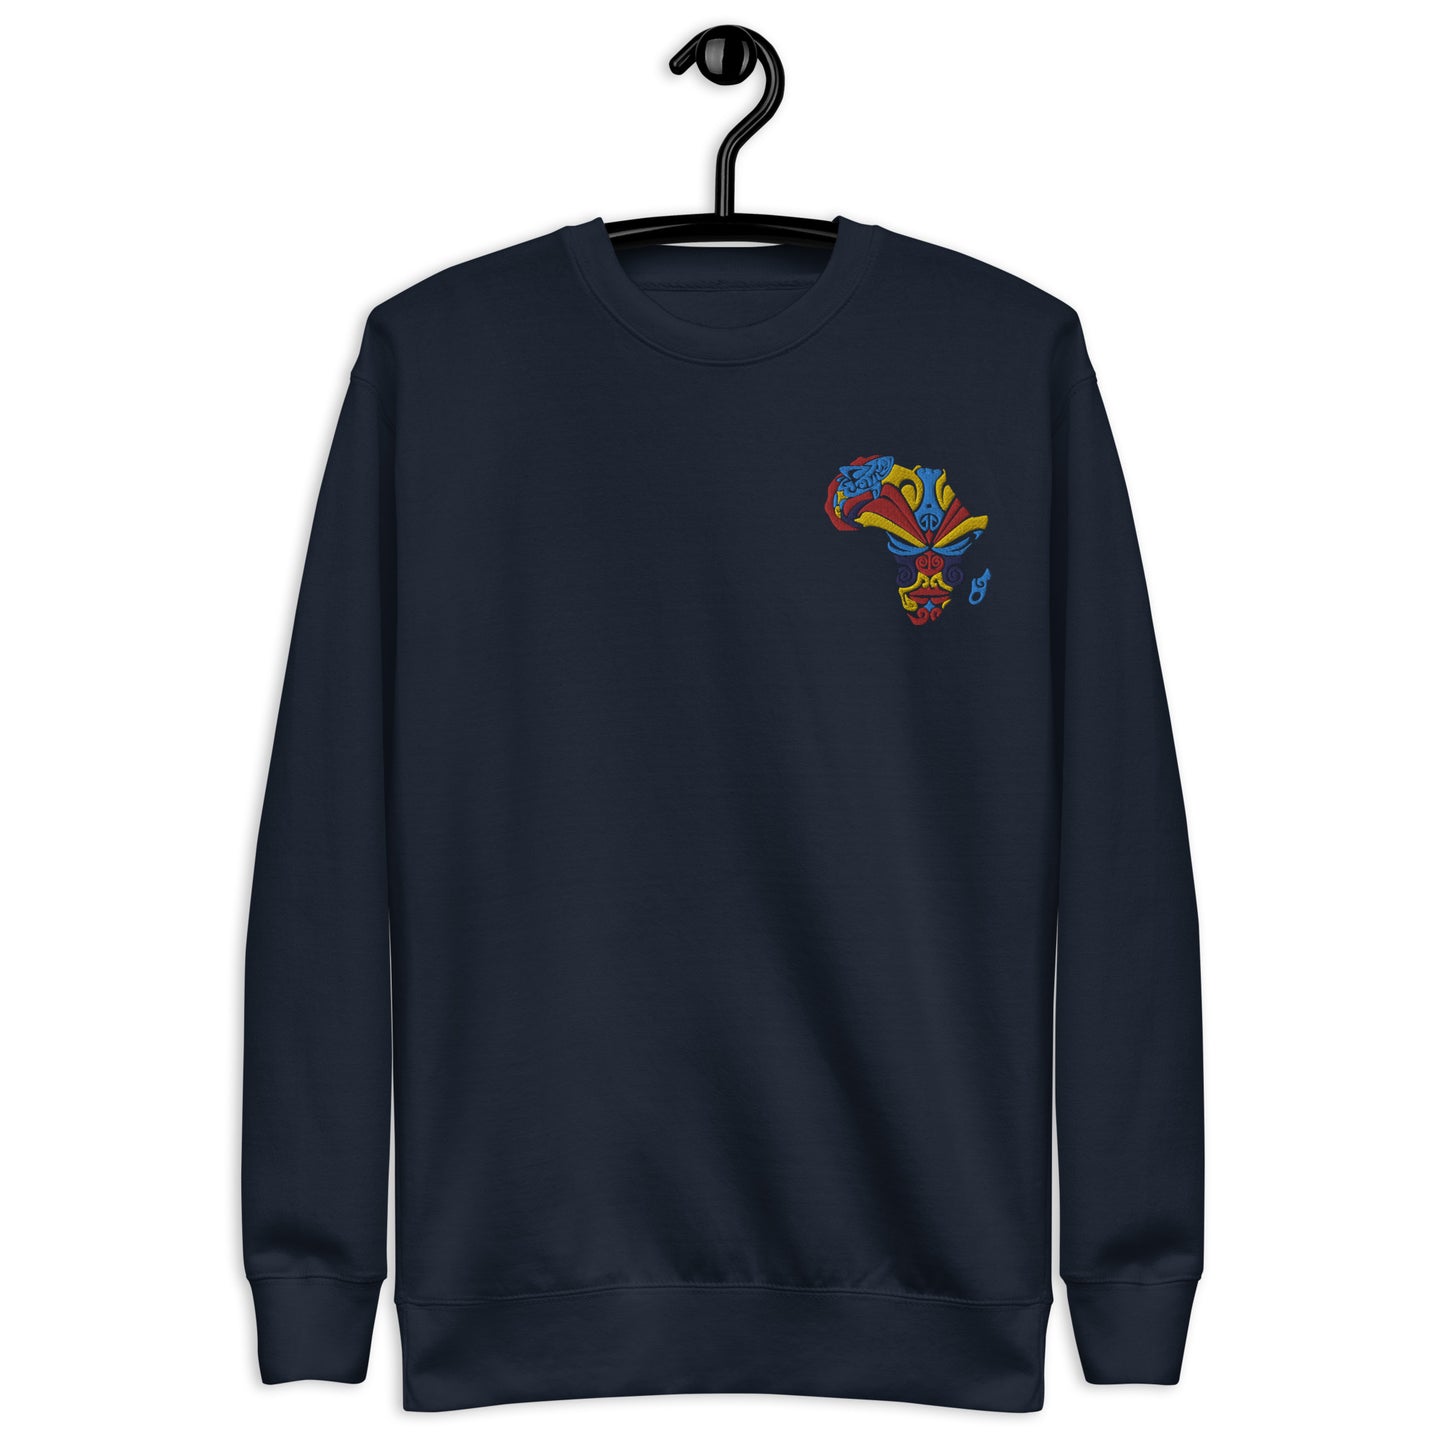 Unisex Premium Sweatshirt - Chest Banamerica Collection